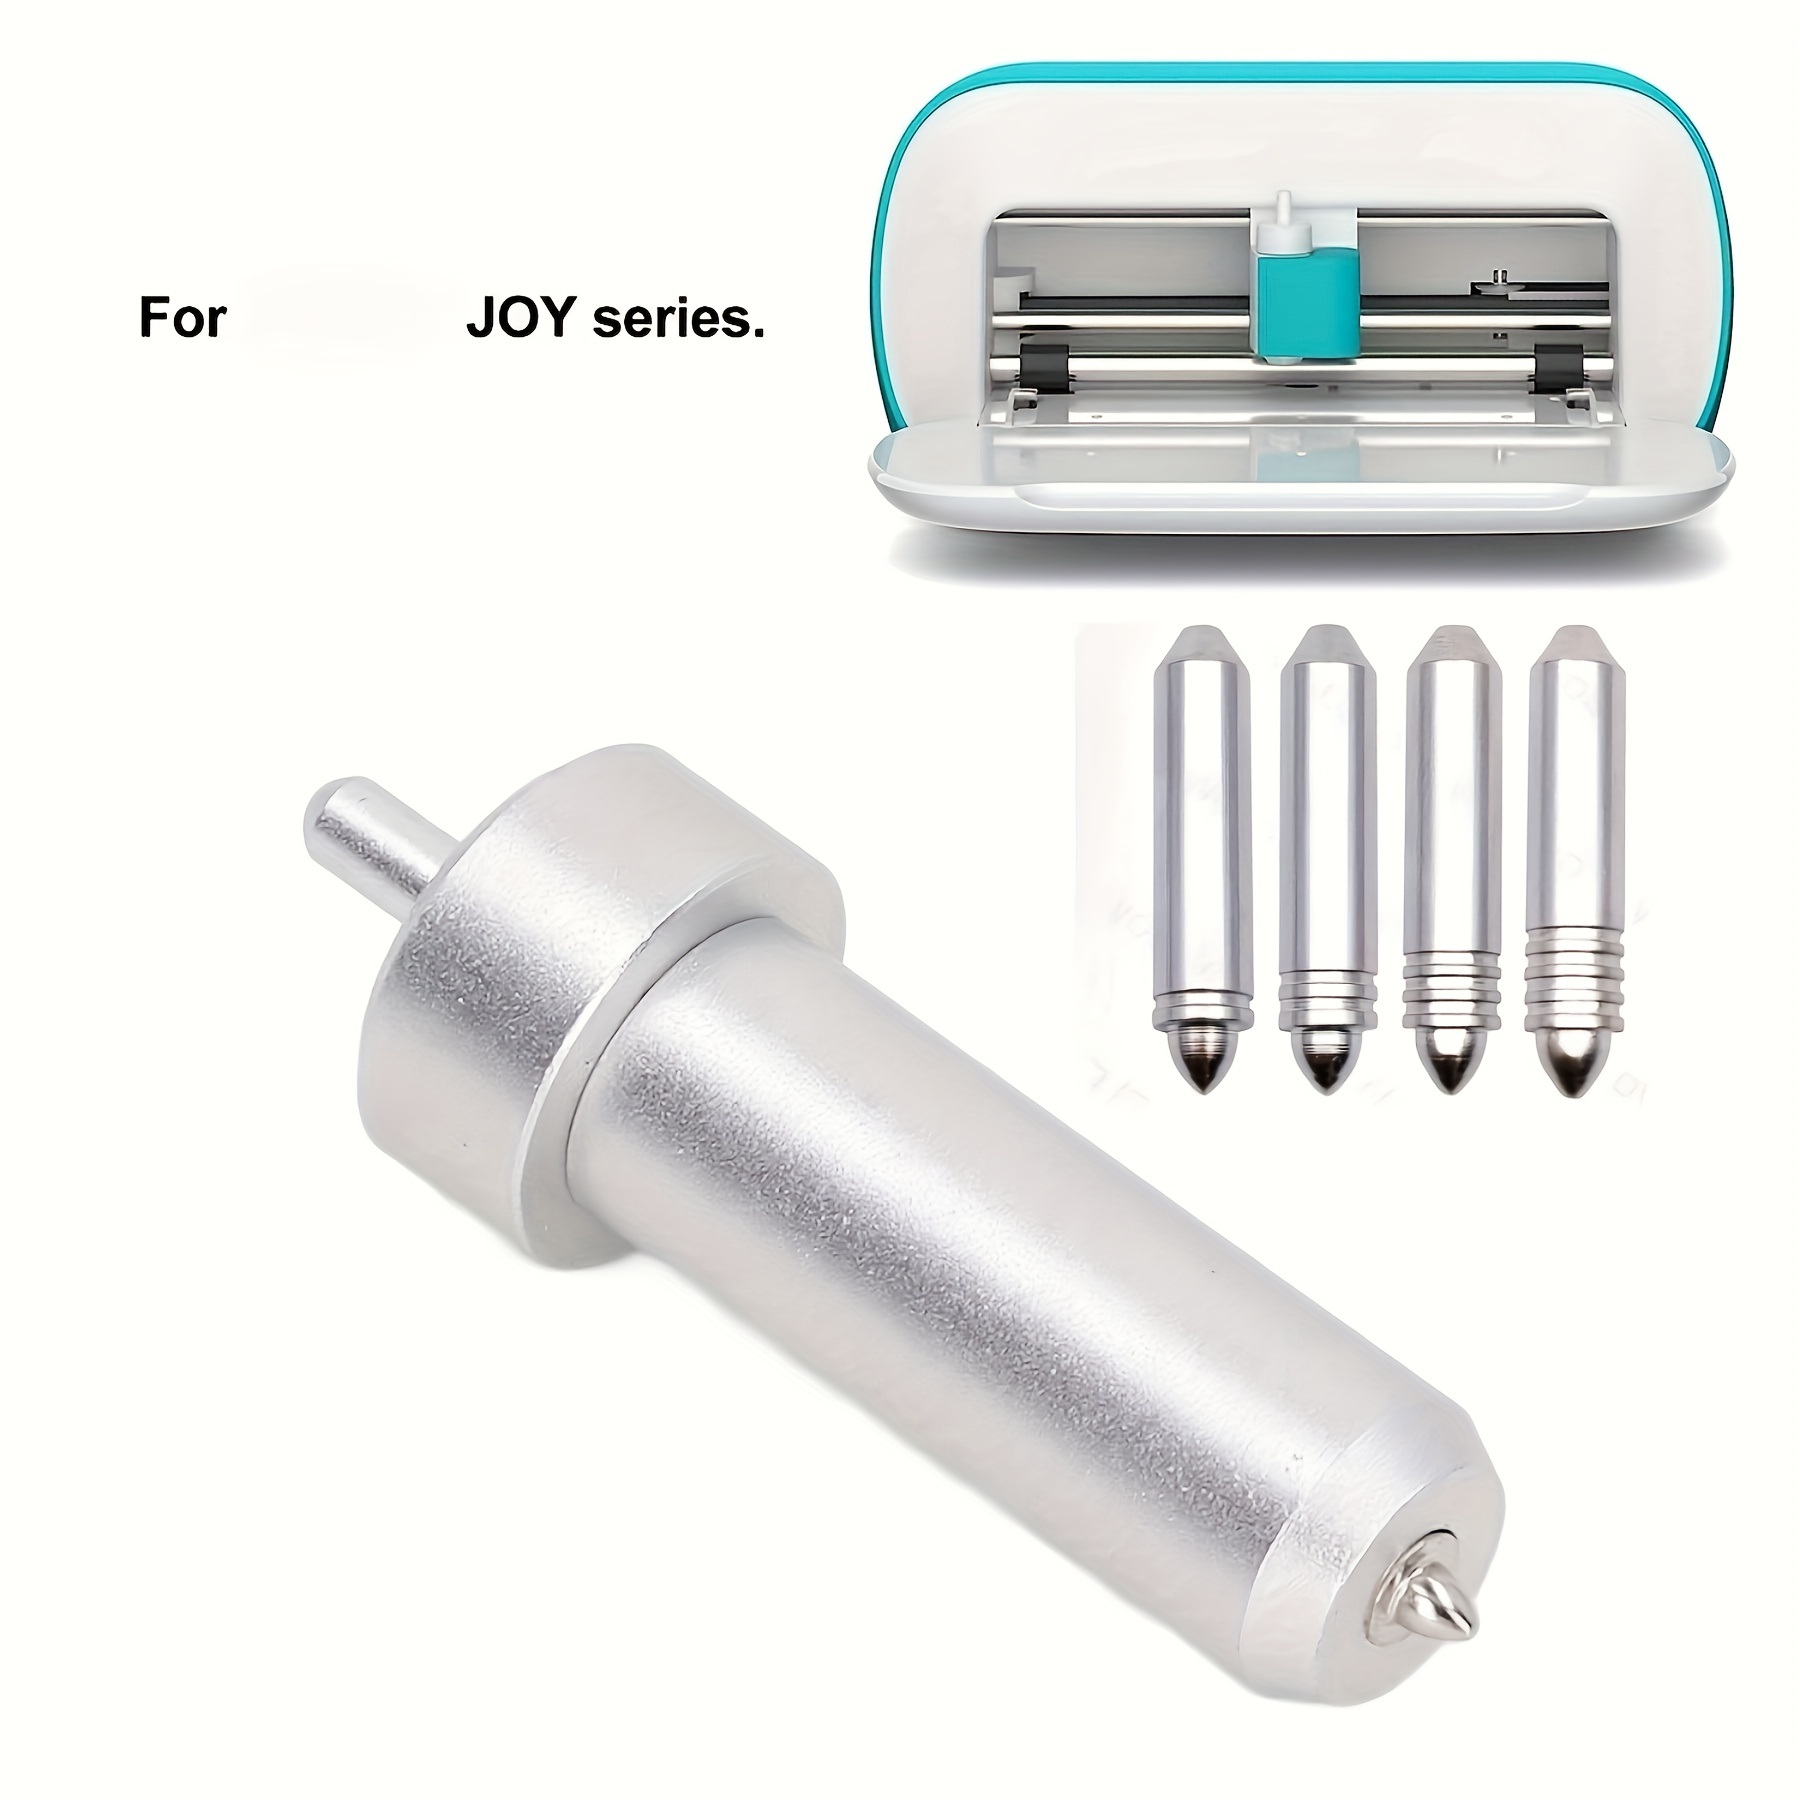 Cricut Joy Foil Transfer Kit for Precision Crafting